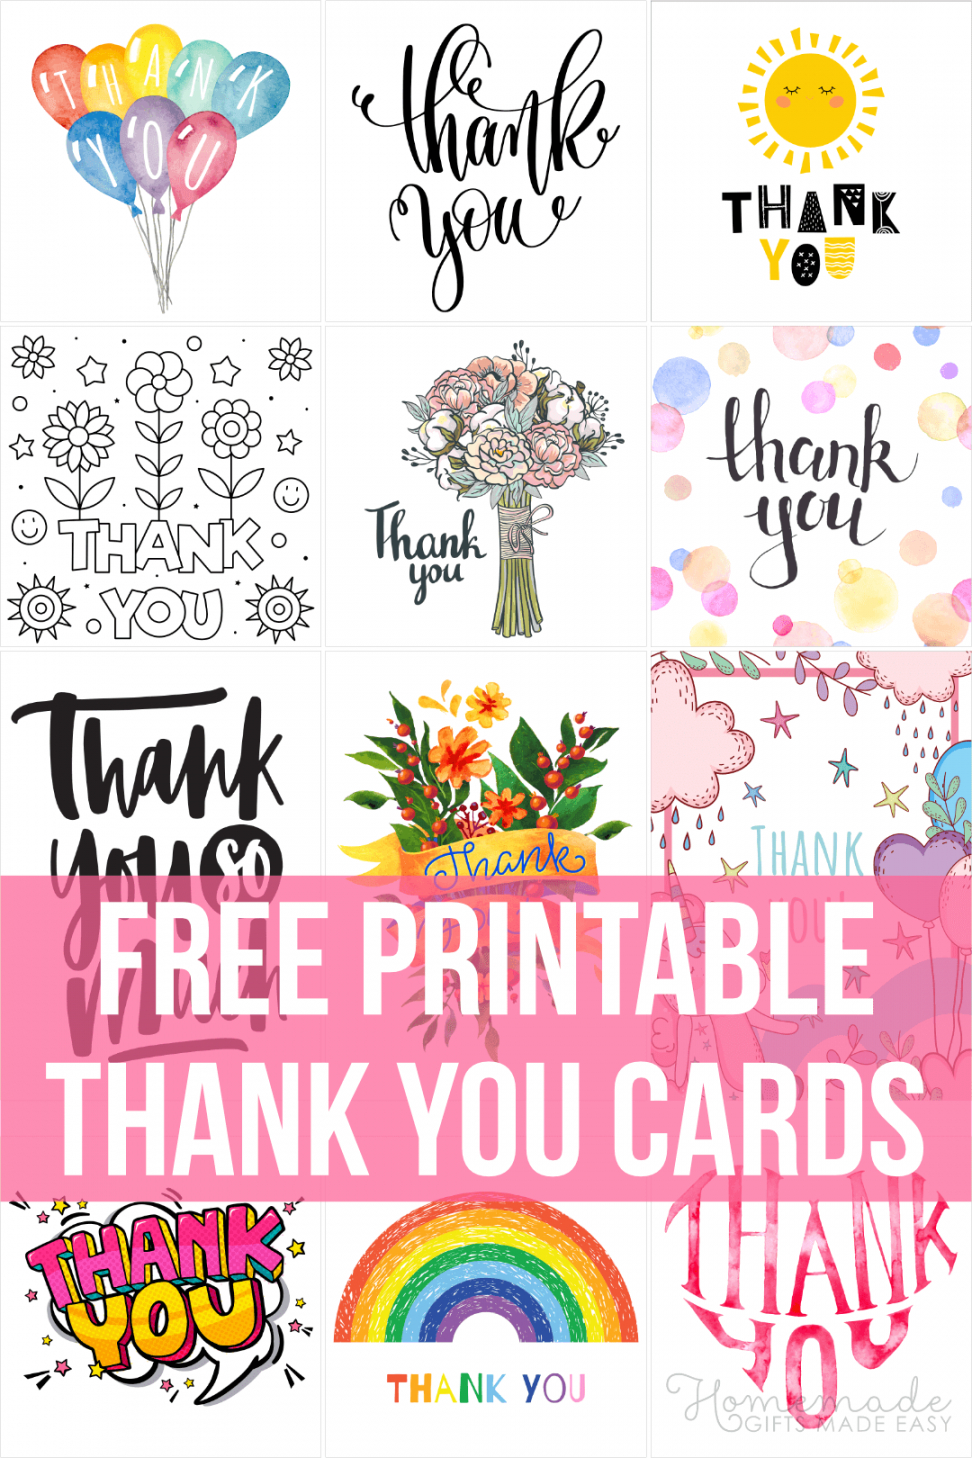 Thank You Card For Printing | EmetOnlineBlog